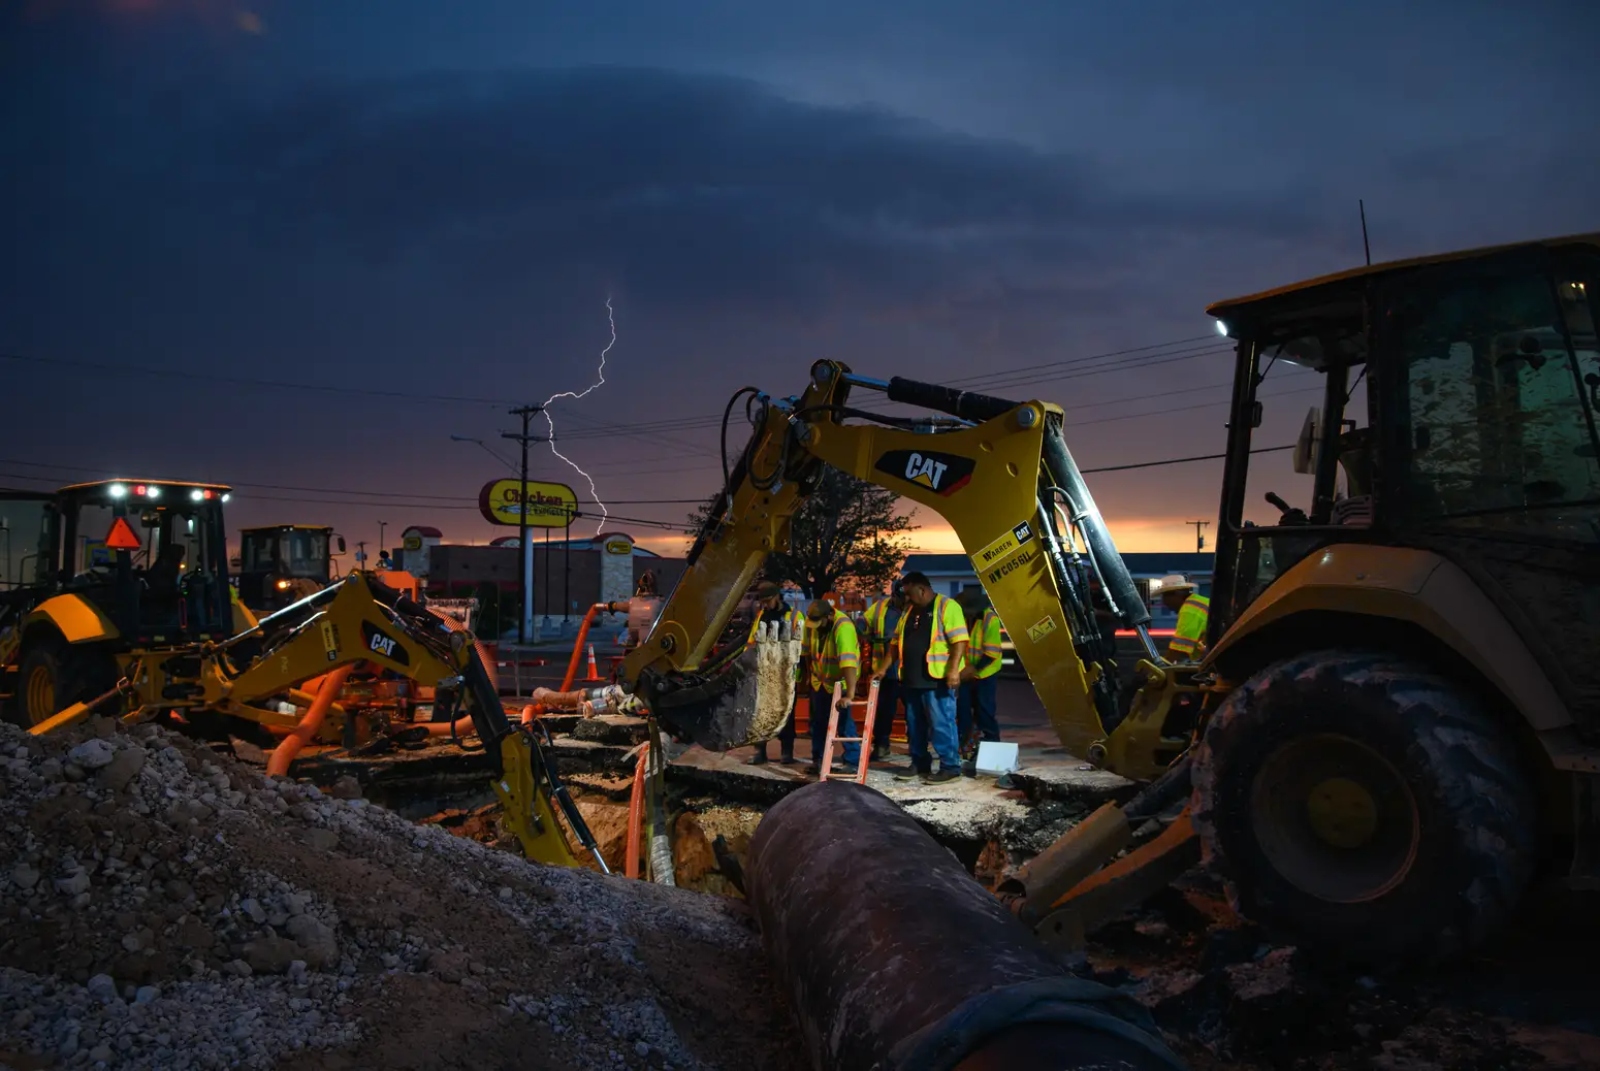 Lighting strikes as heavy machinery digs up a street under a dark stormy sky.